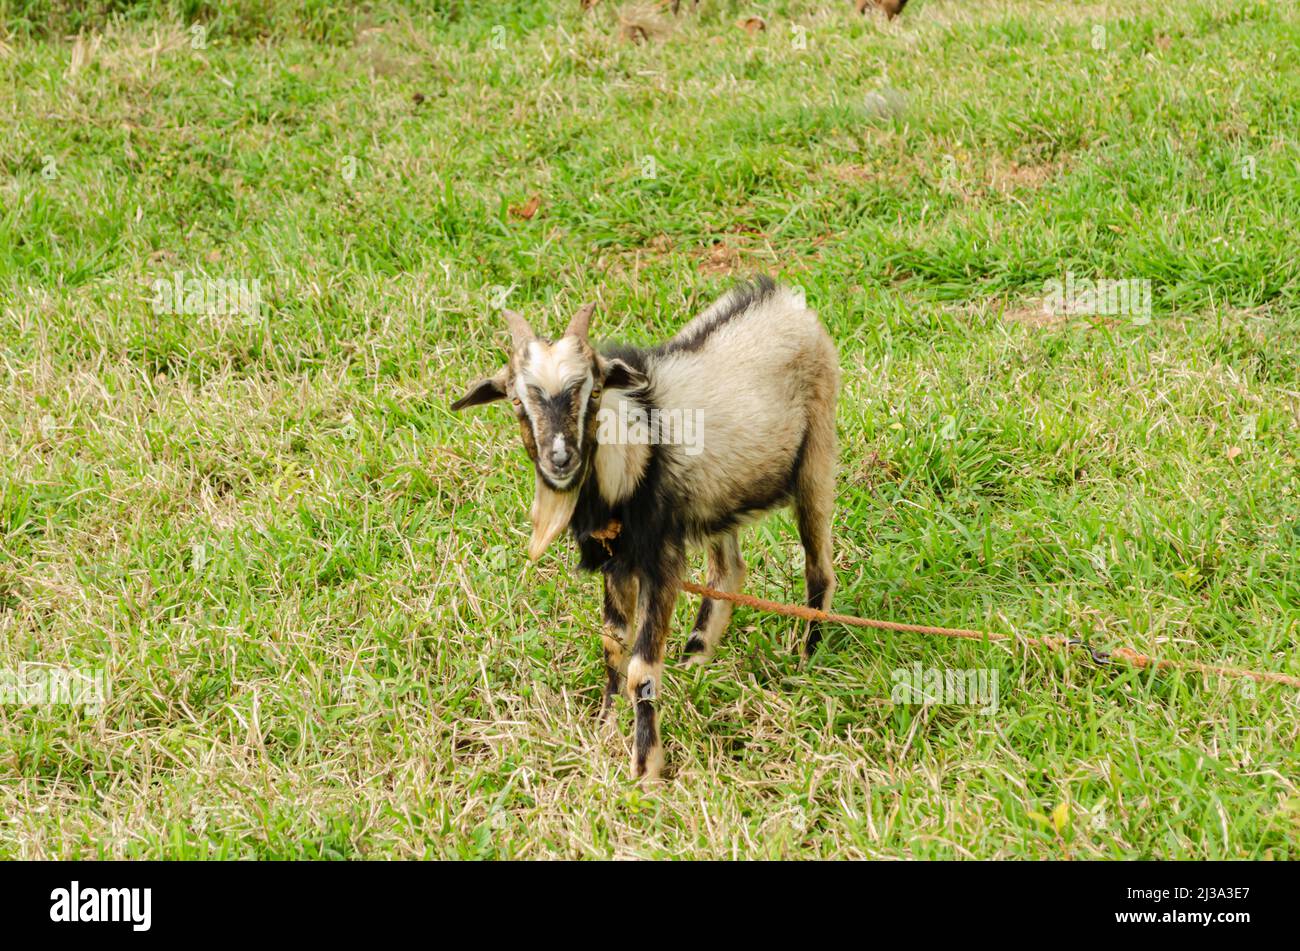 Ram Goat Looking Ahead Stock Photo